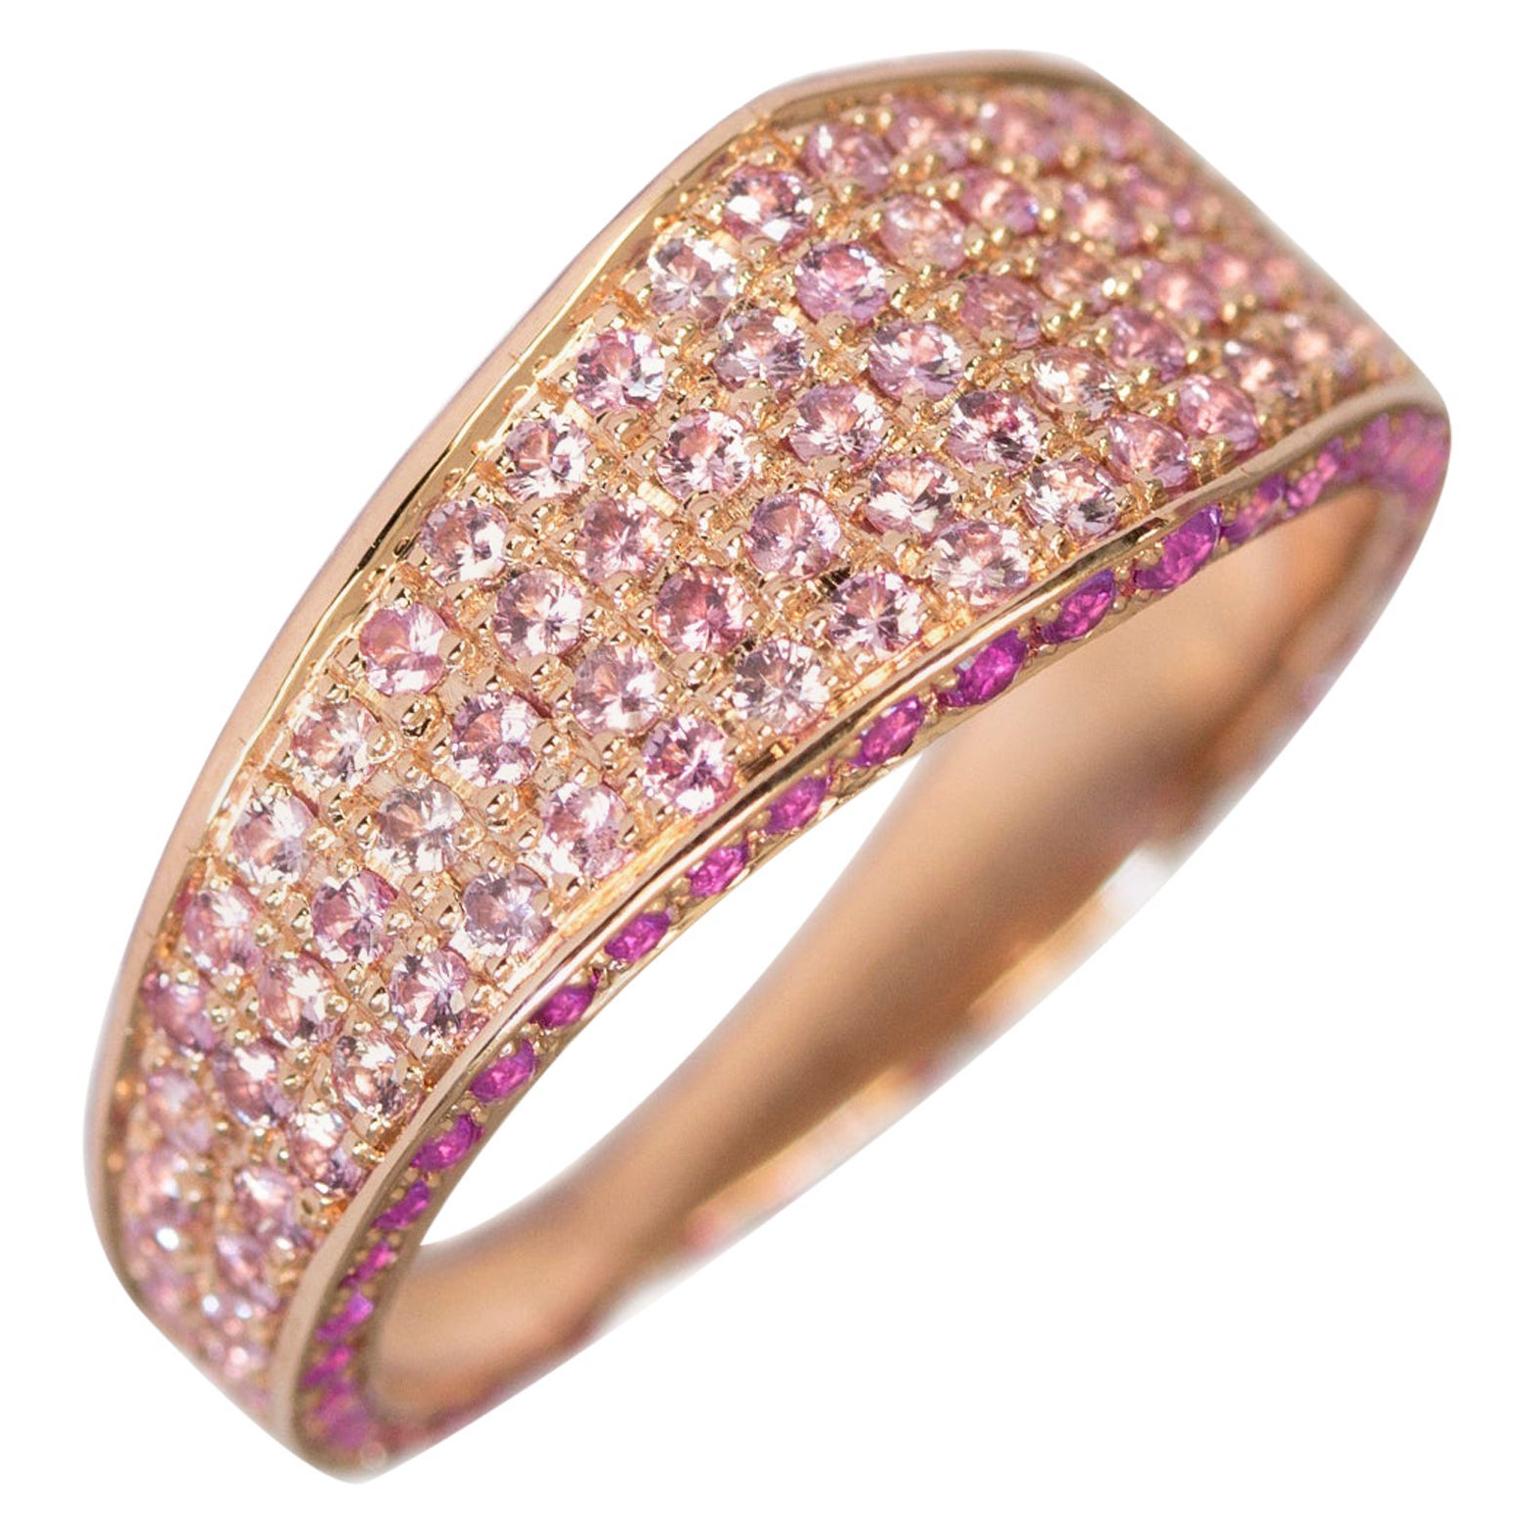 Ralph Masri Modernist Signet Pink Sapphire Ring